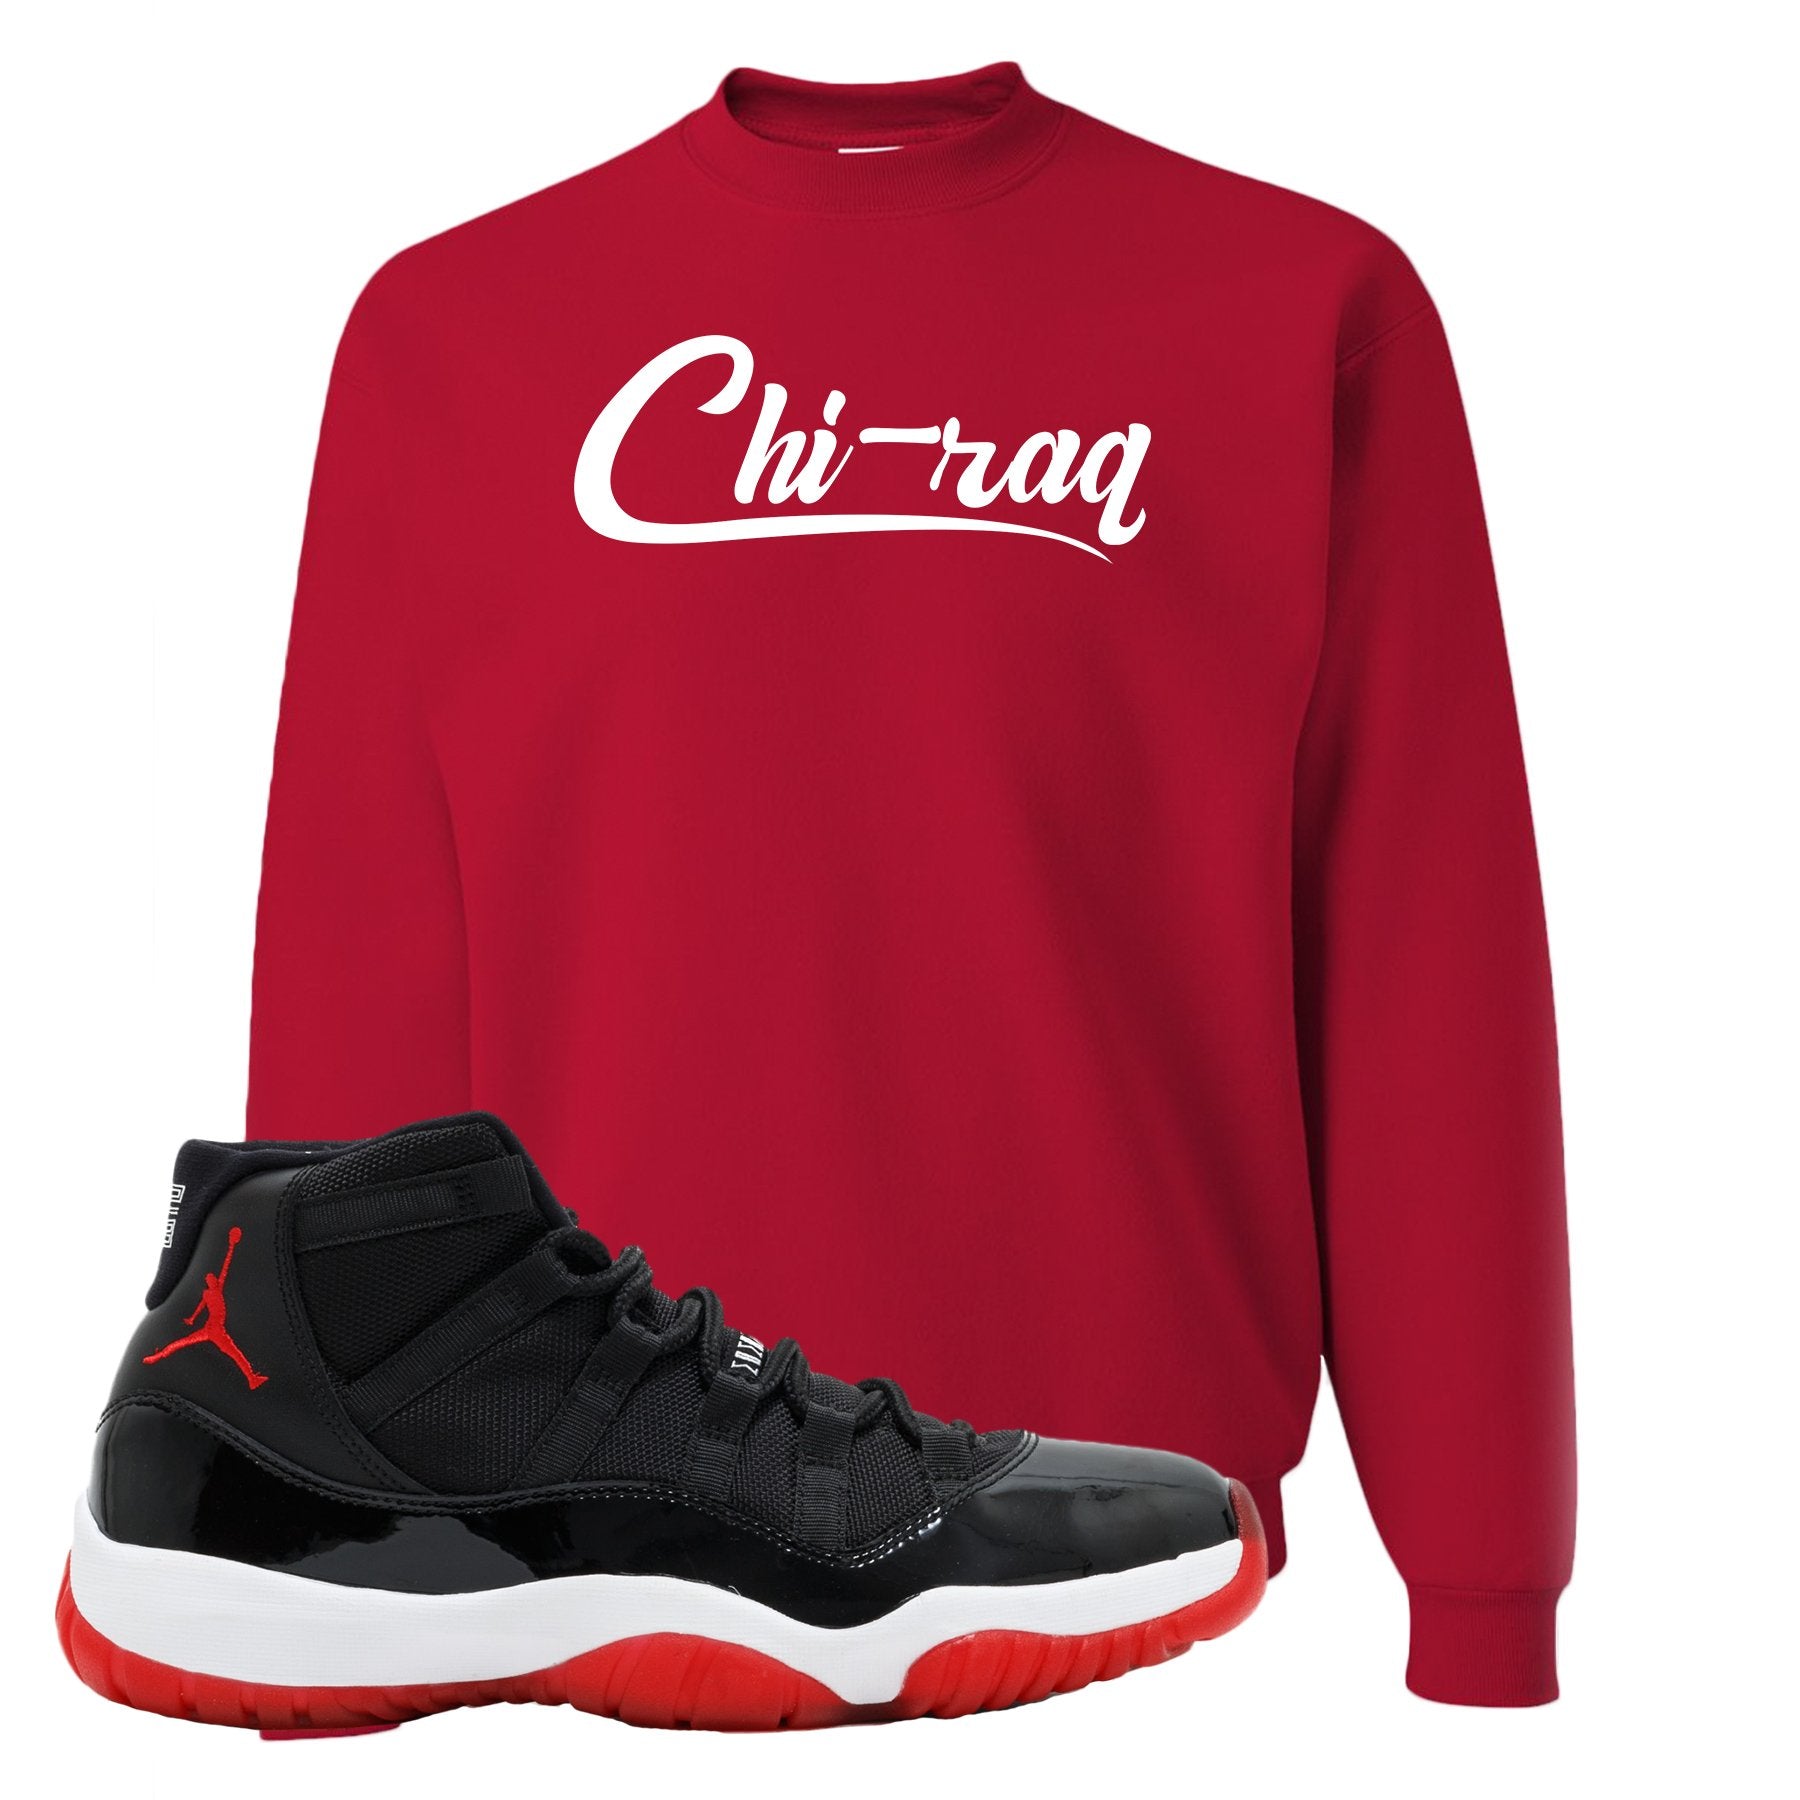 Jordan 11 Bred Chi-raq Red Sneaker Hook Up Crewneck Sweatshirt